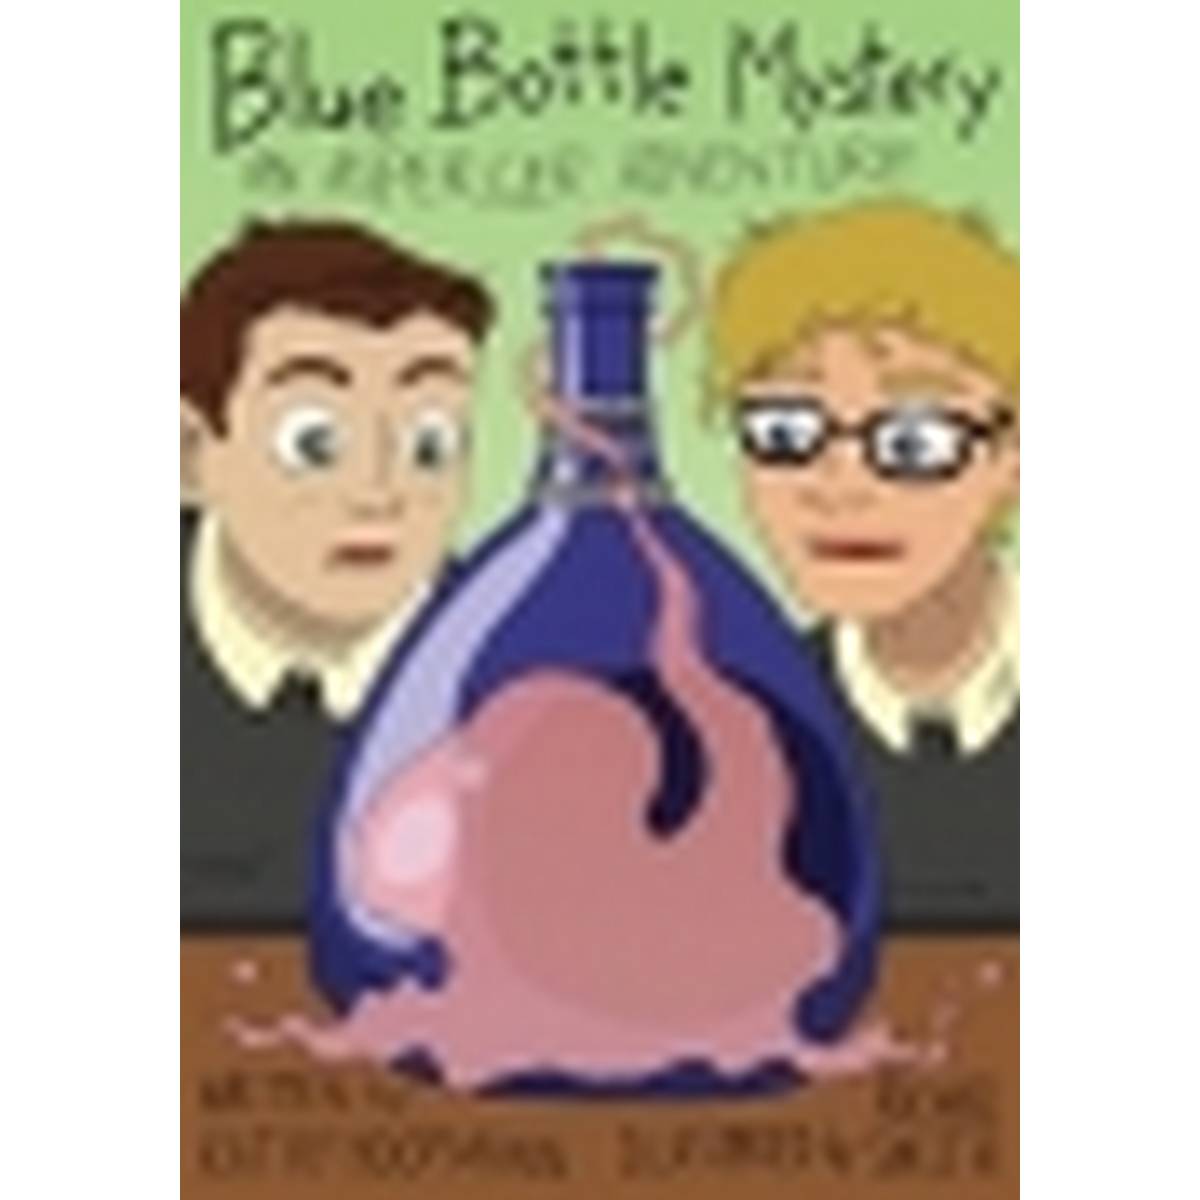 Blue Bottle Mystery - The Graphic Novel: An Asperger Adventure